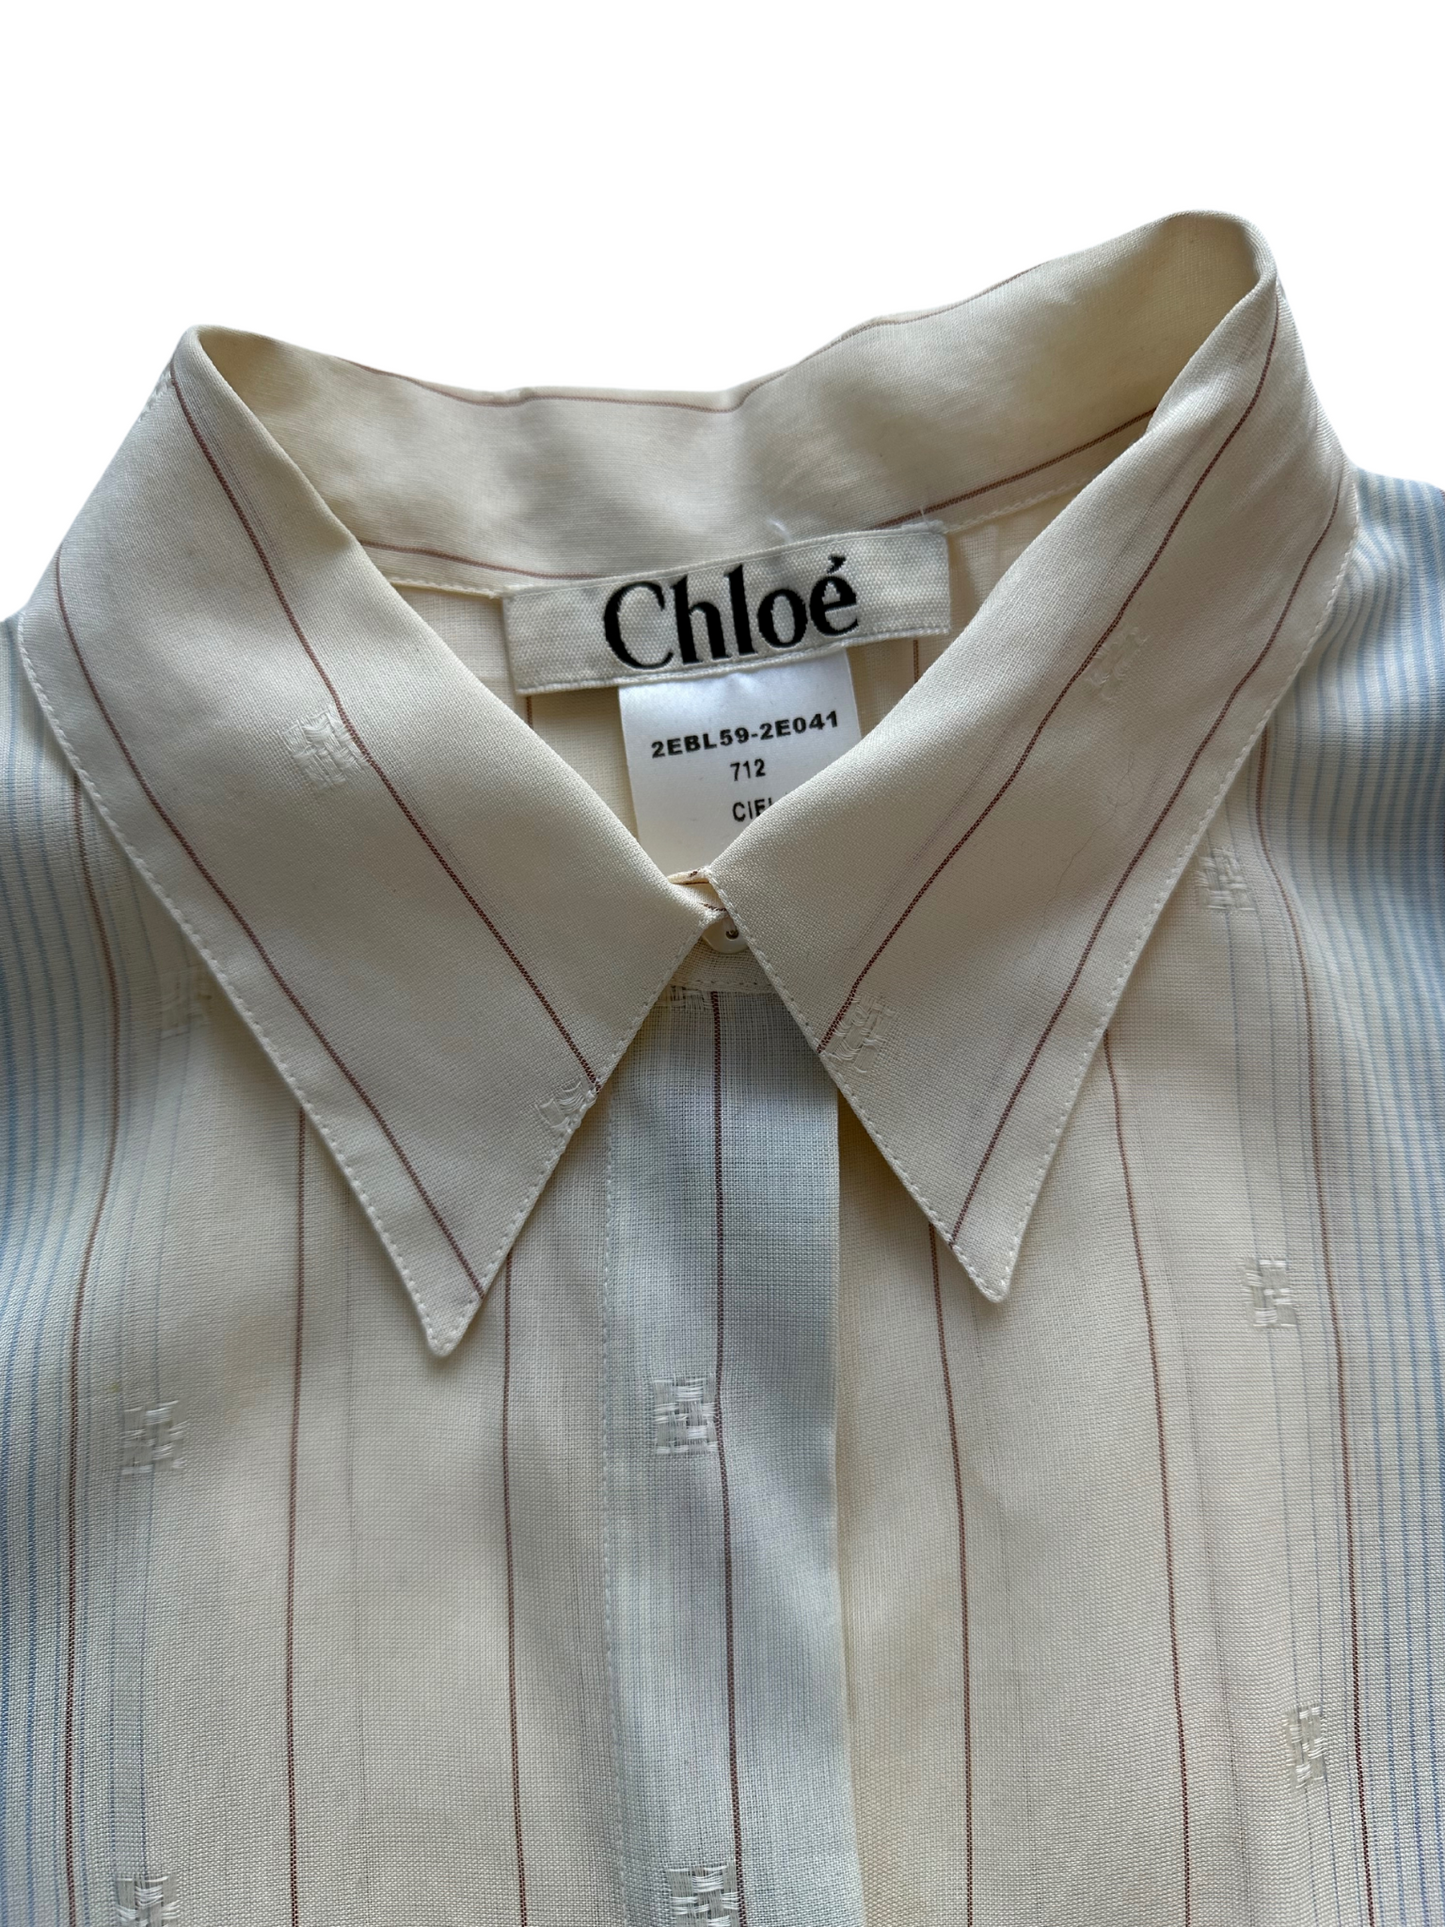 Chloe 2002 Phoebe Philo cut out striped shirt F 40 (US 4)